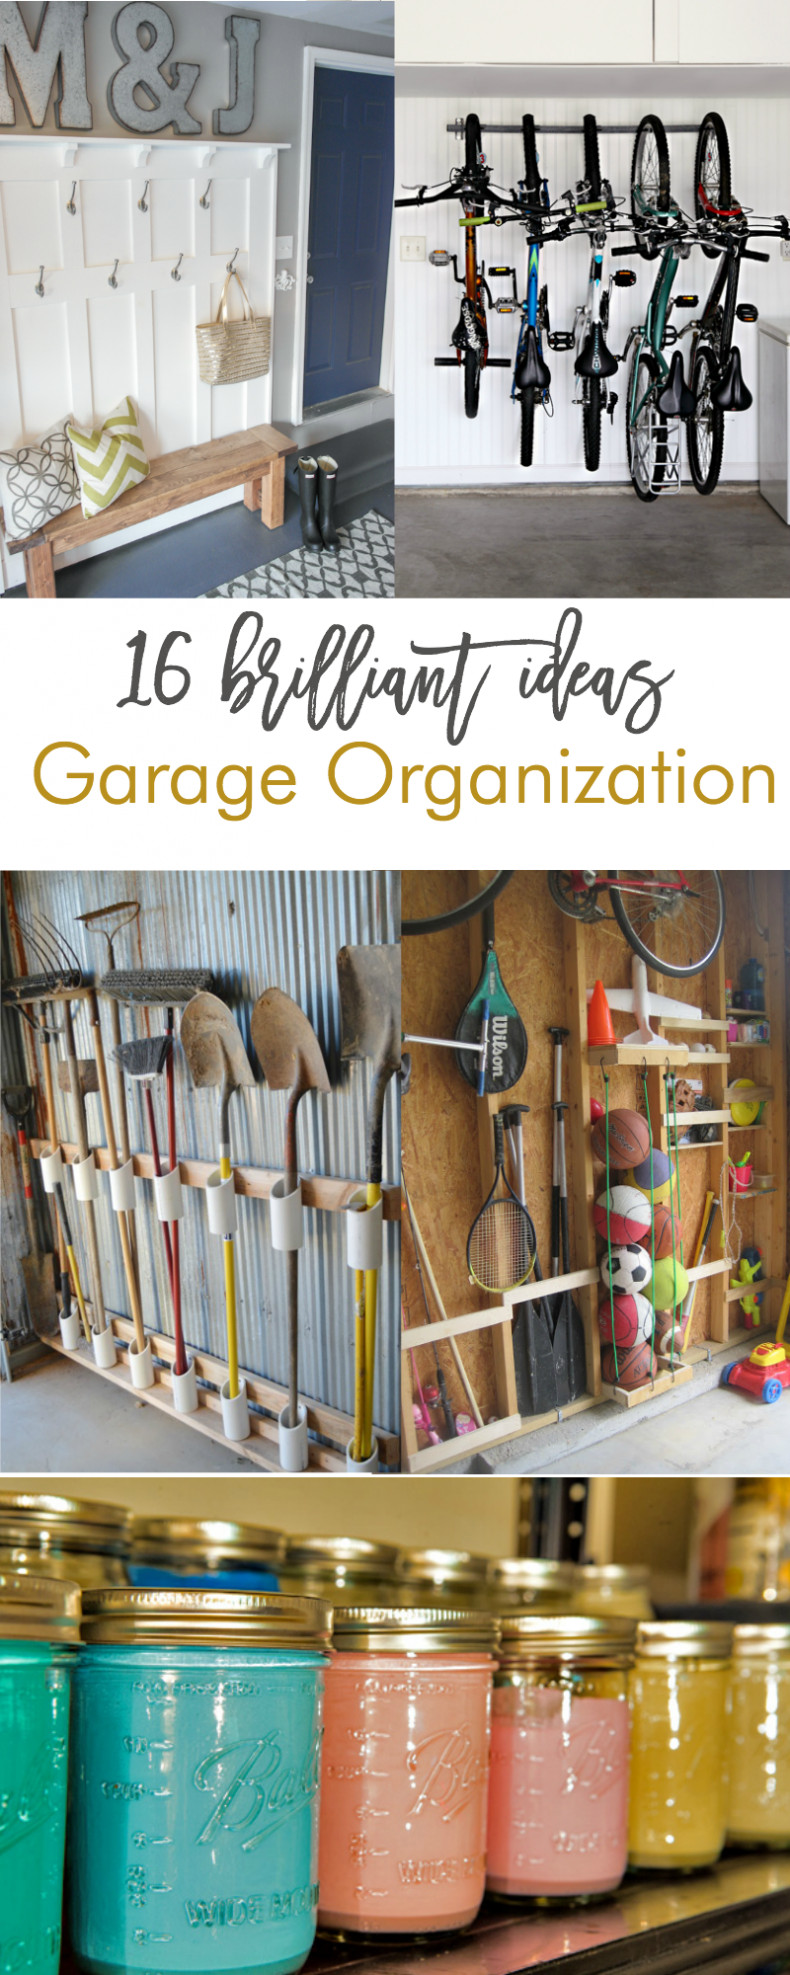 Best ideas about DIY Organization Ideas
. Save or Pin 16 Brilliant DIY Garage Organization Ideas Now.